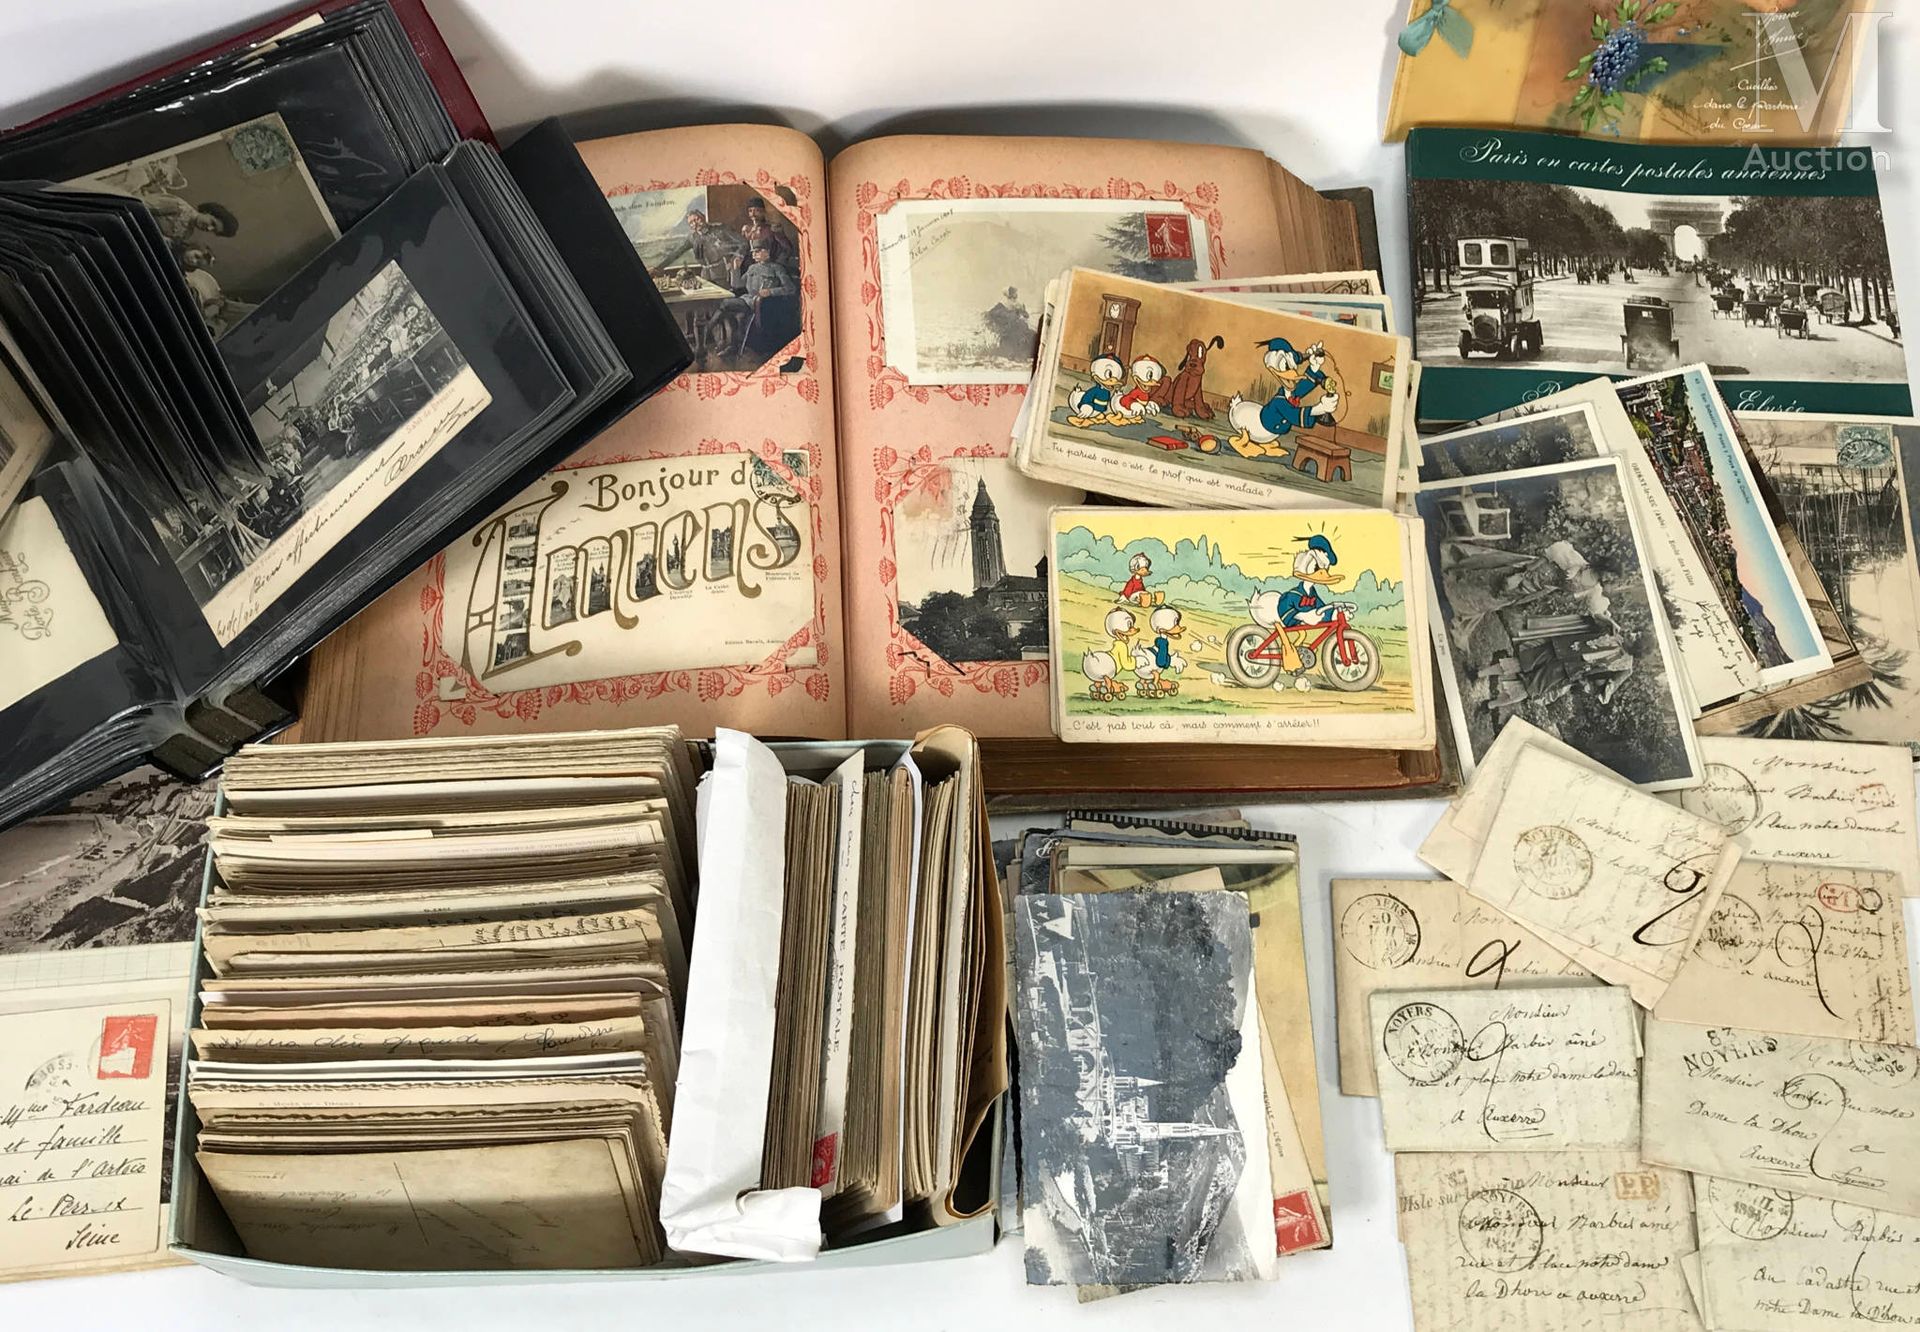 Fort lot de cartes postales anciennes, cartes photos... 明信片，照片卡，花式卡...

迪斯尼系列、城镇&hellip;